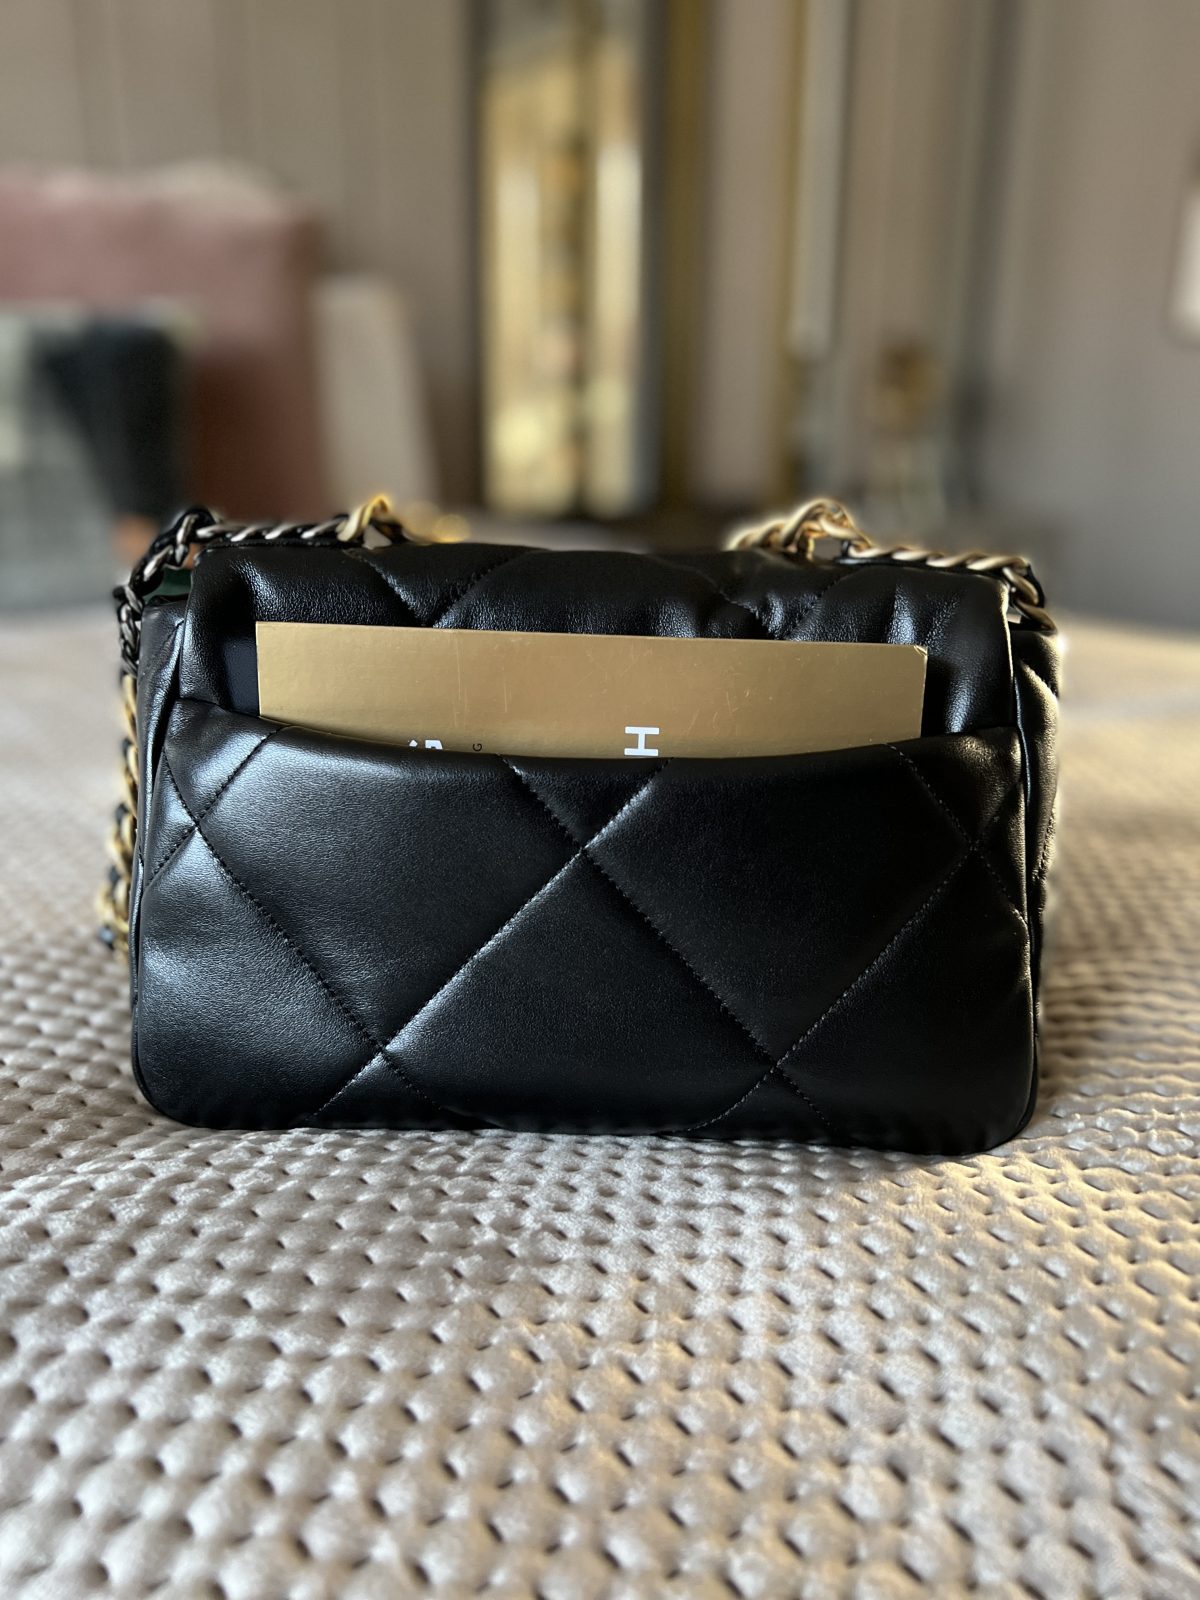 My Chanel 19 handbag - black